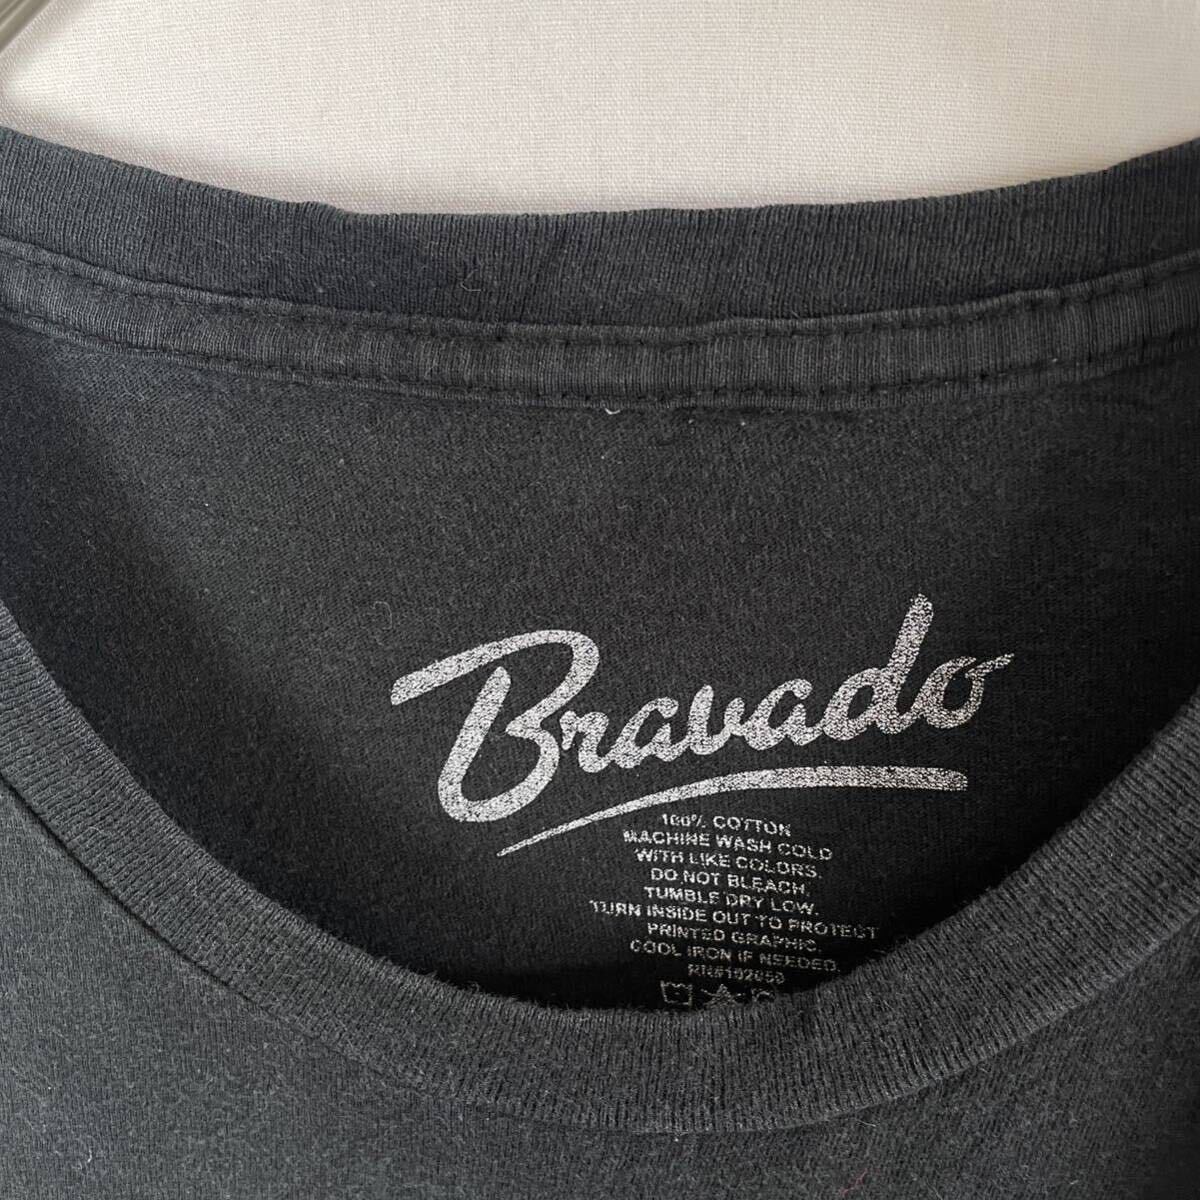 Bravado RED HOT CHILIPEPPERS короткий рукав принт футболка б/у одежда XL размер частота футболка 